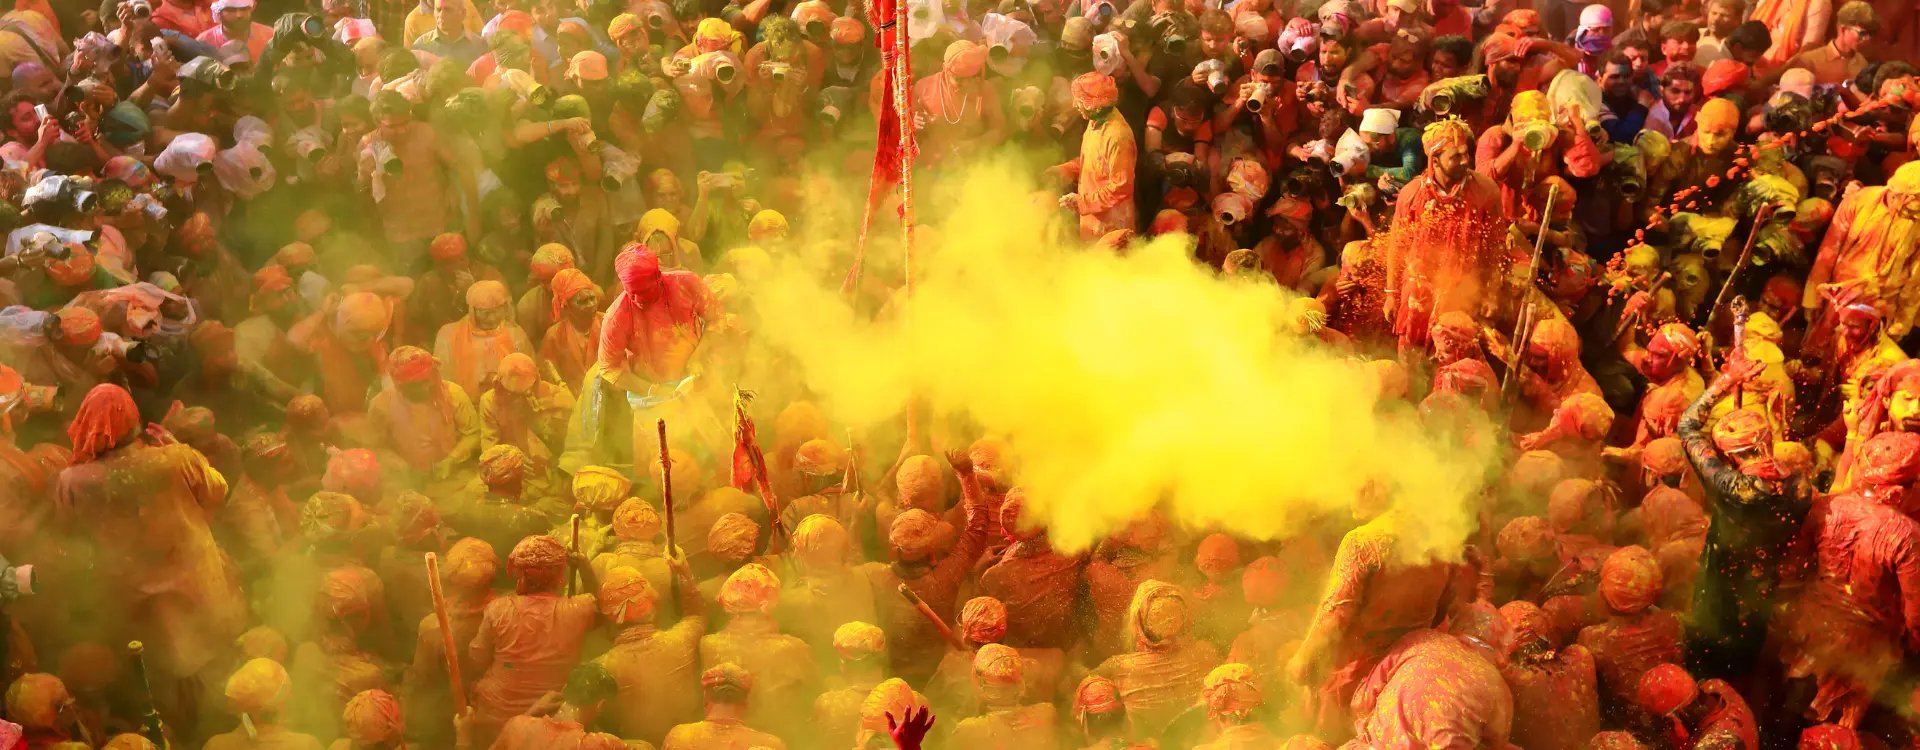 Holi festival celebrations in India